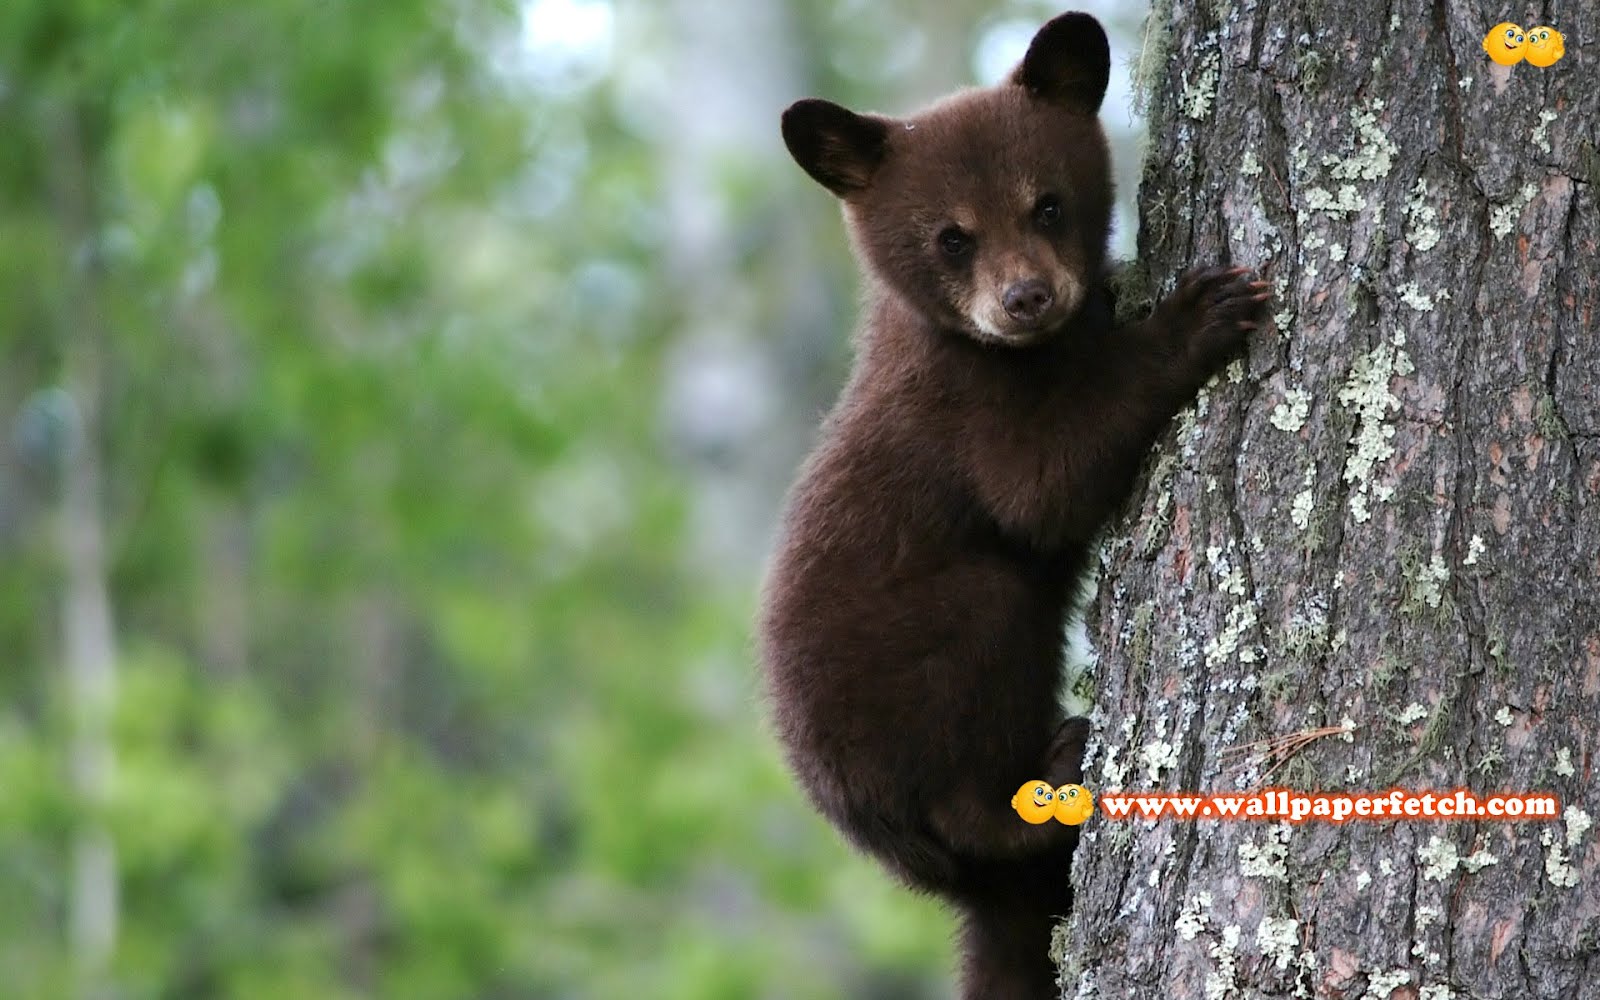 Bear Cub Wallpaper. Cub Scout Camping Wallpaper, Carbon Cub Wallpaper and Cub Scouts Derby Wallpaper